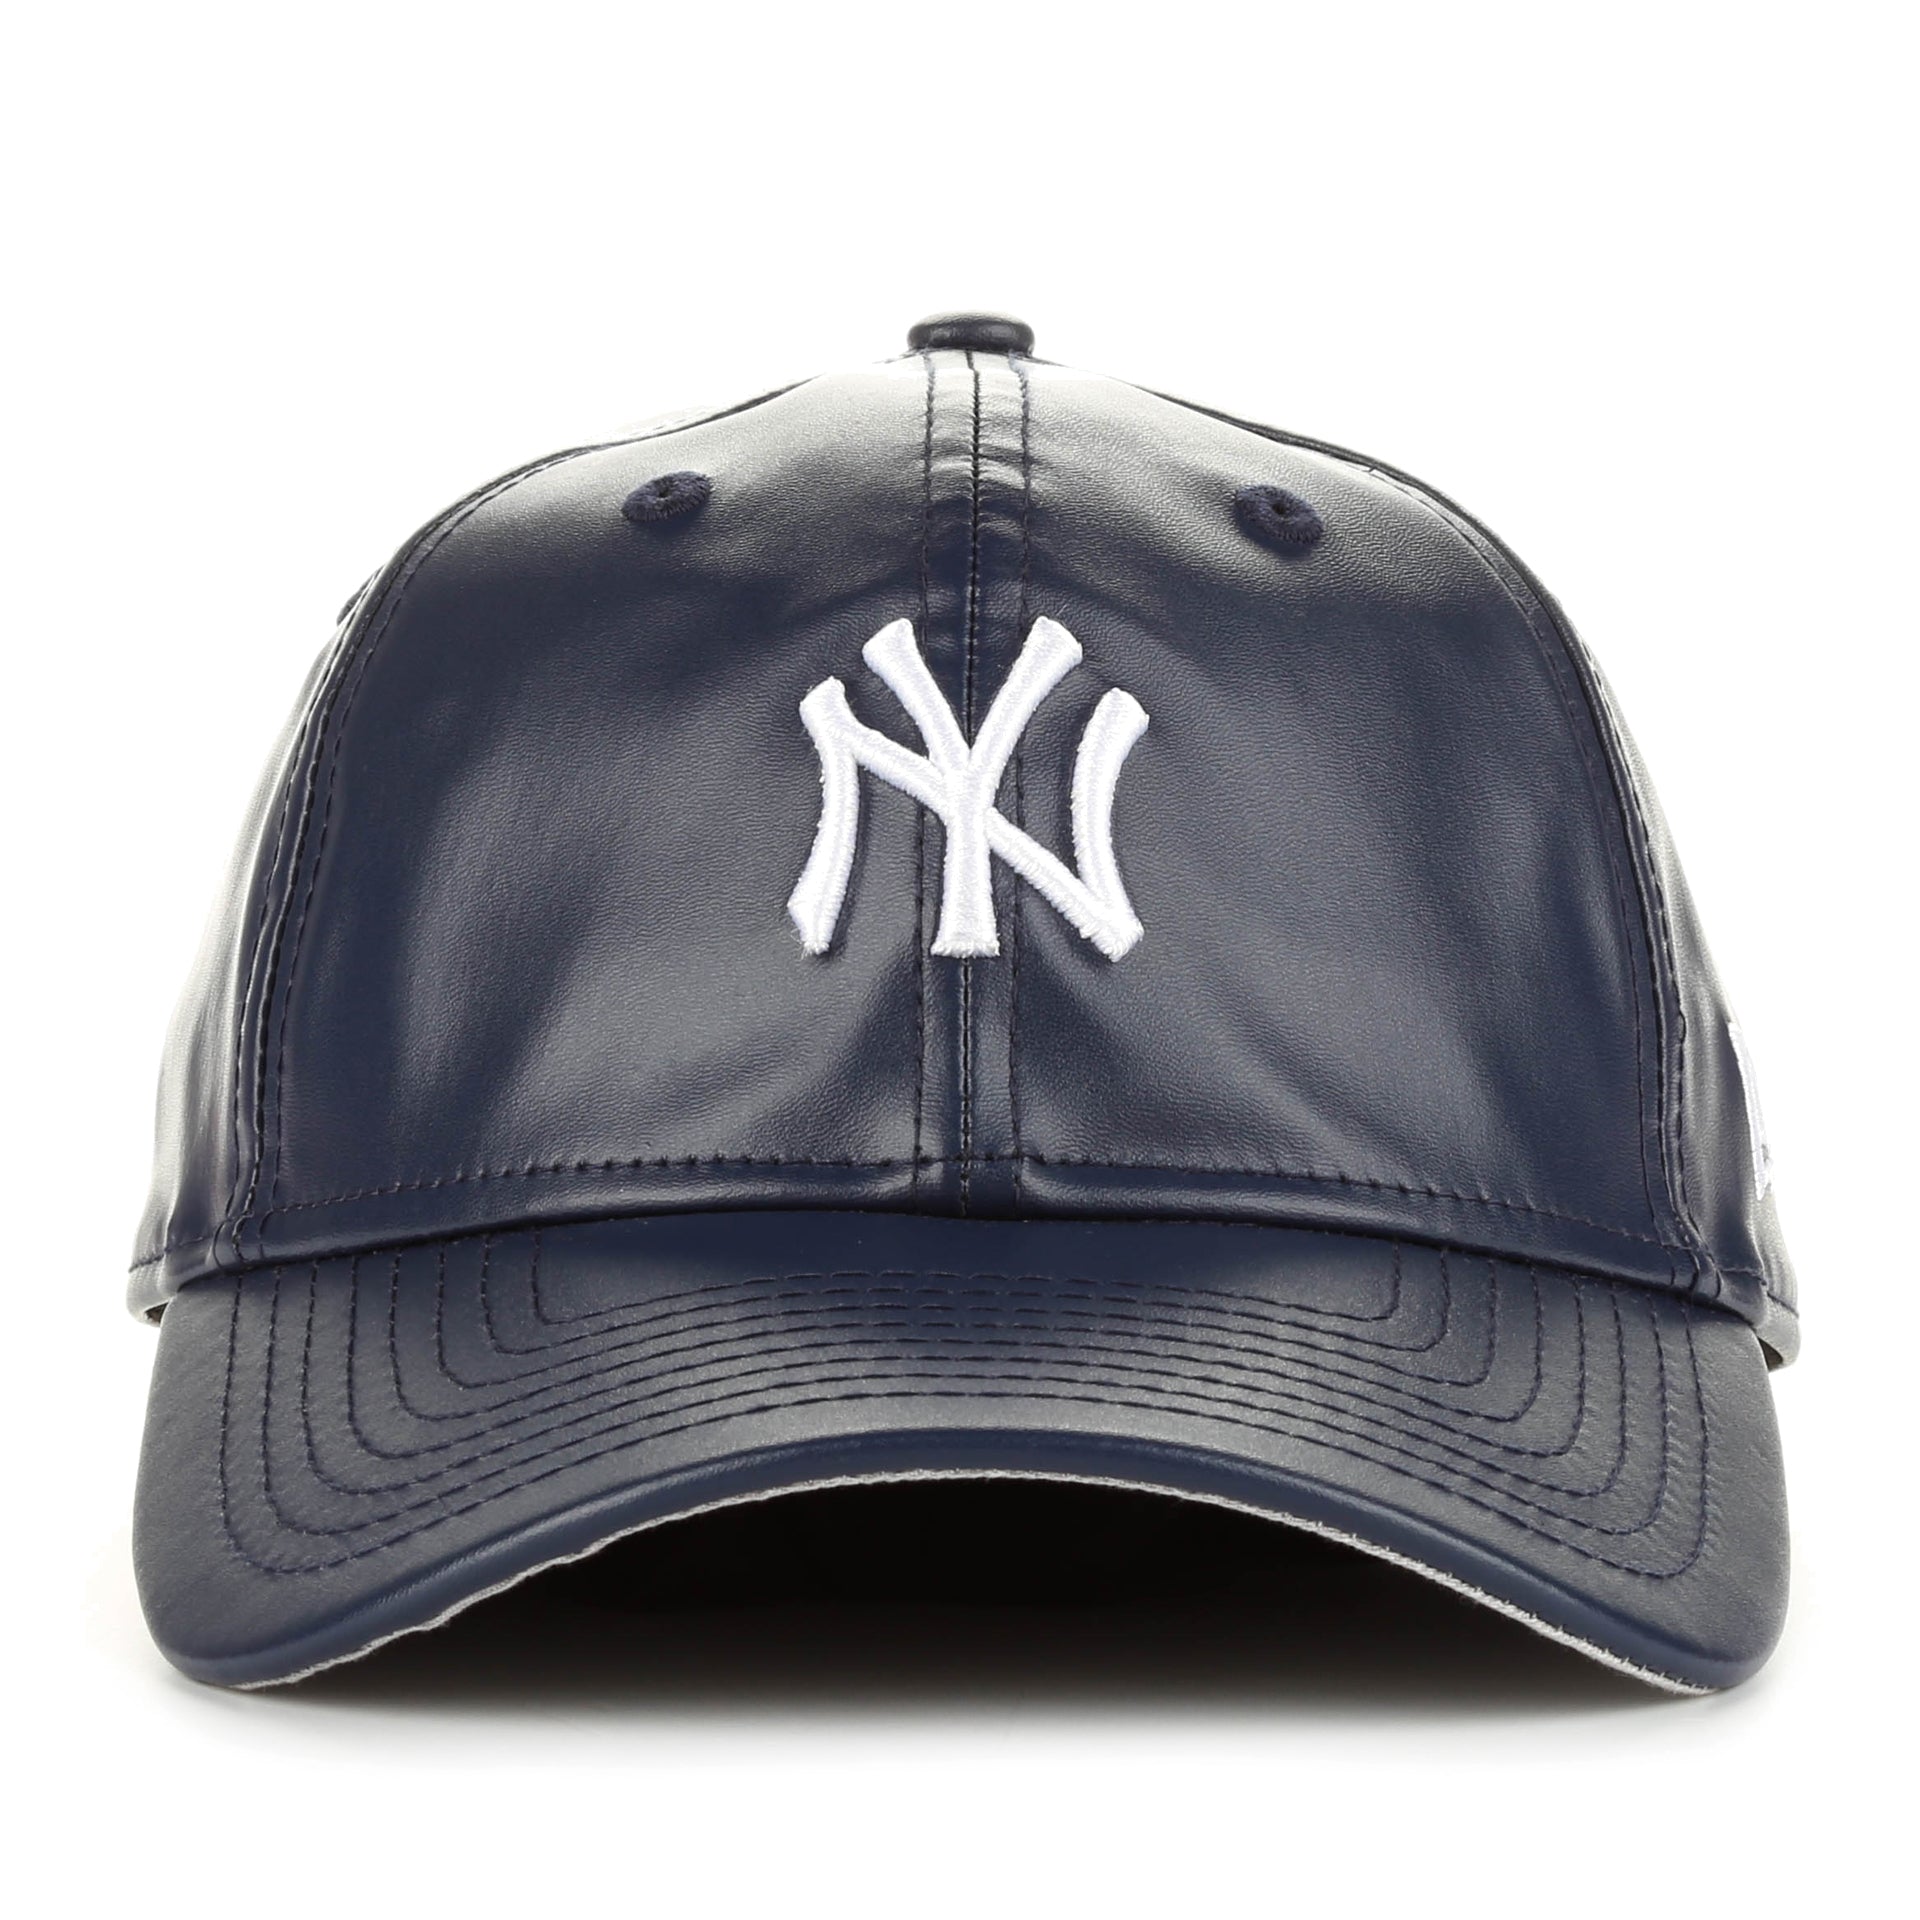 New Era 9Fifty Washed Over Snapback - New York Yankees/Dark Denim - New Star